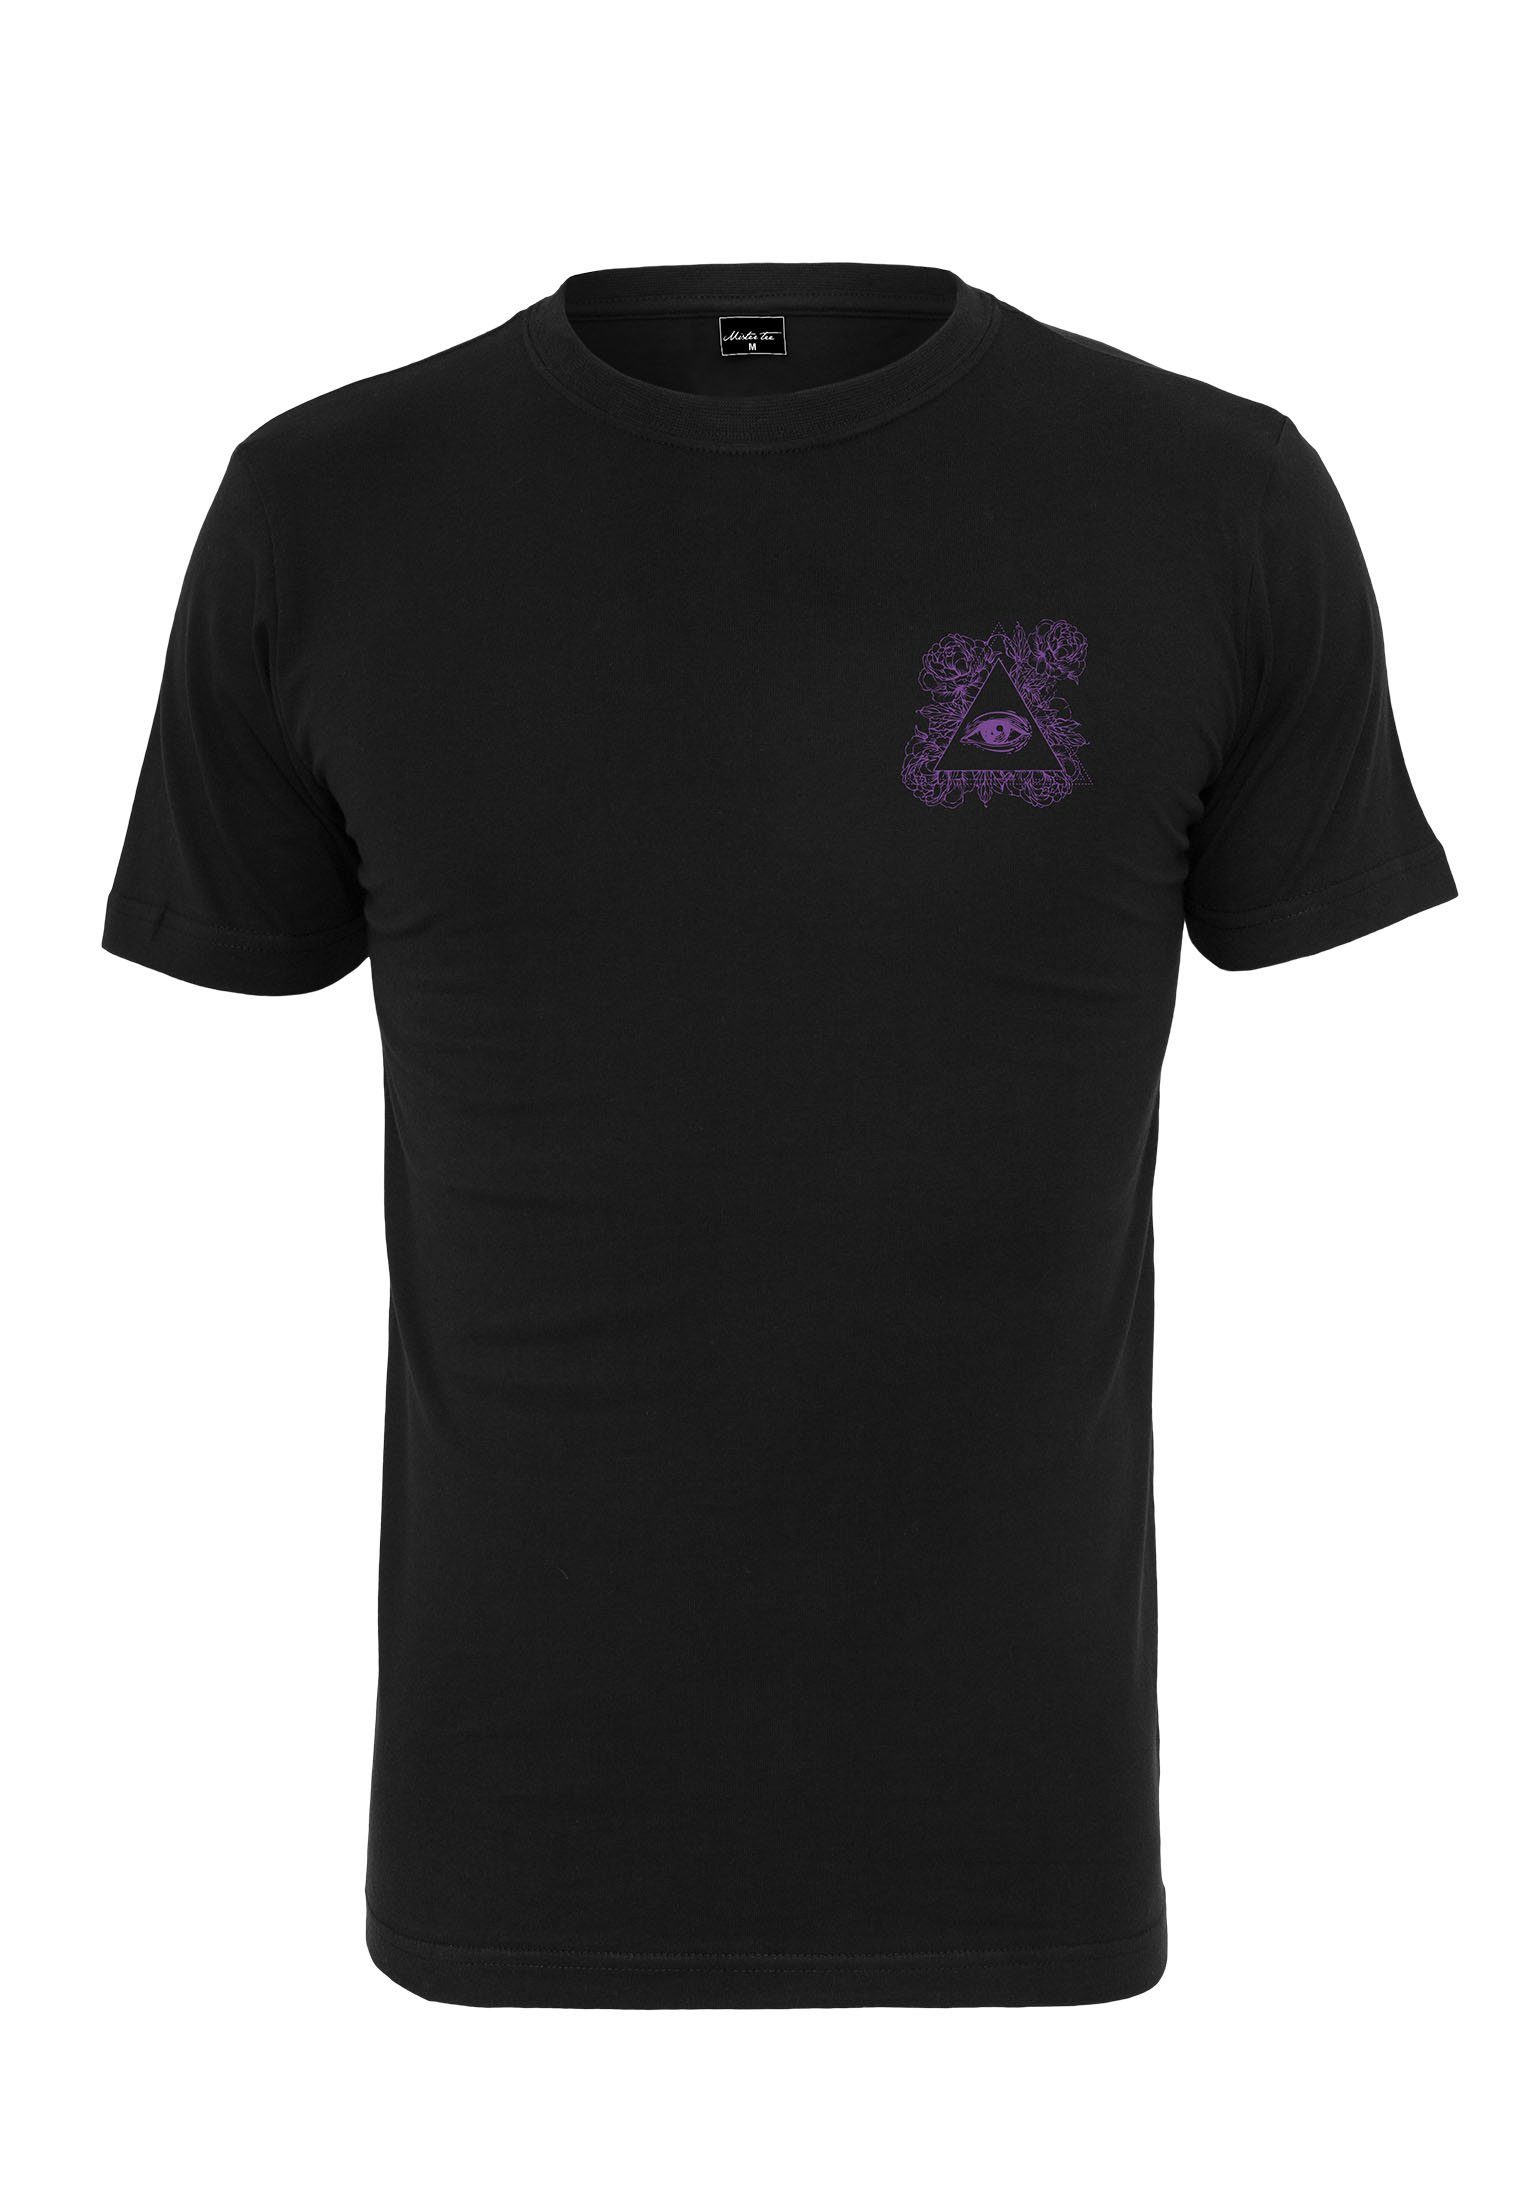 Purple Mister MT714 Print-Shirt black Tee Views